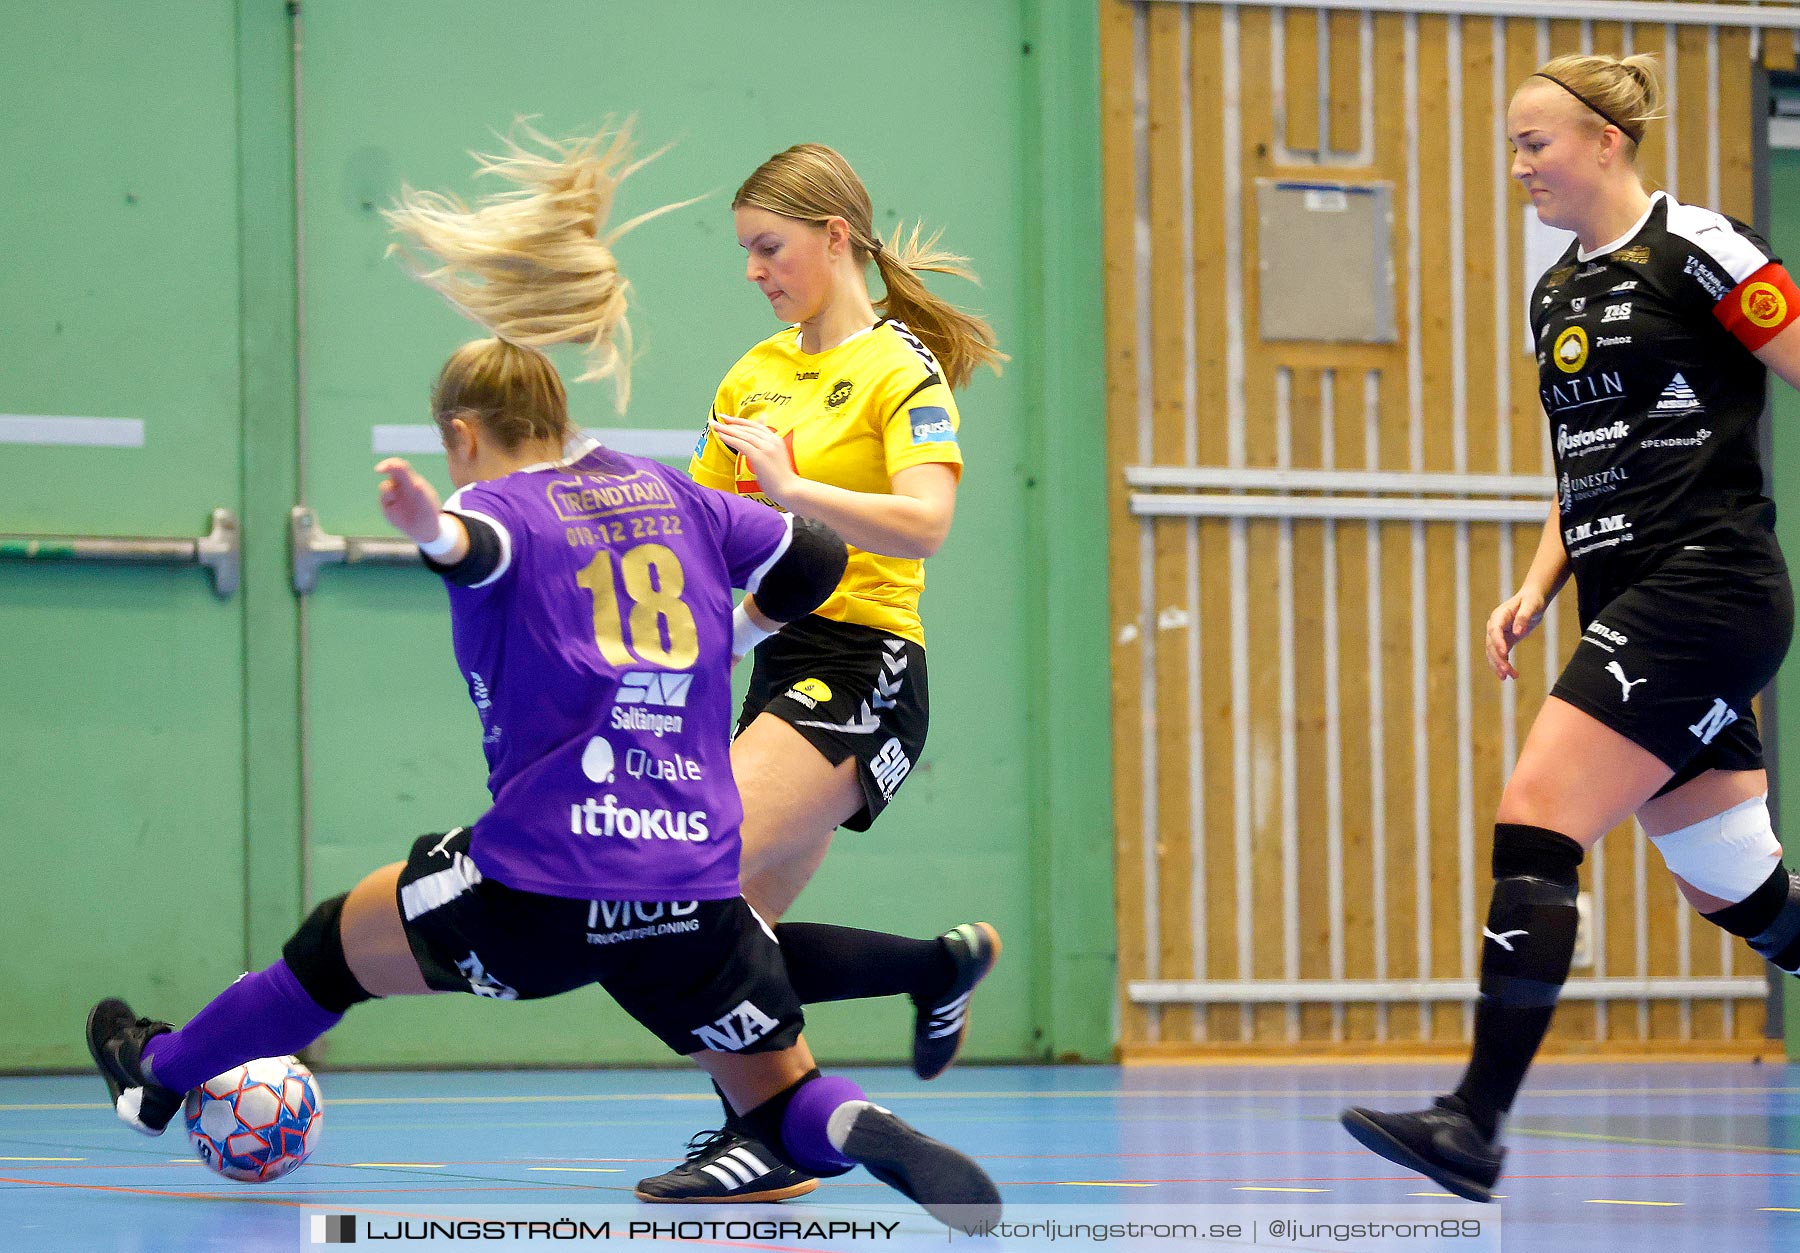 Skövde Futsalcup 2021 Damer Örebro Futsal Club-Skultorps IF 2,dam,Arena Skövde,Skövde,Sverige,Futsal,,2021,270495